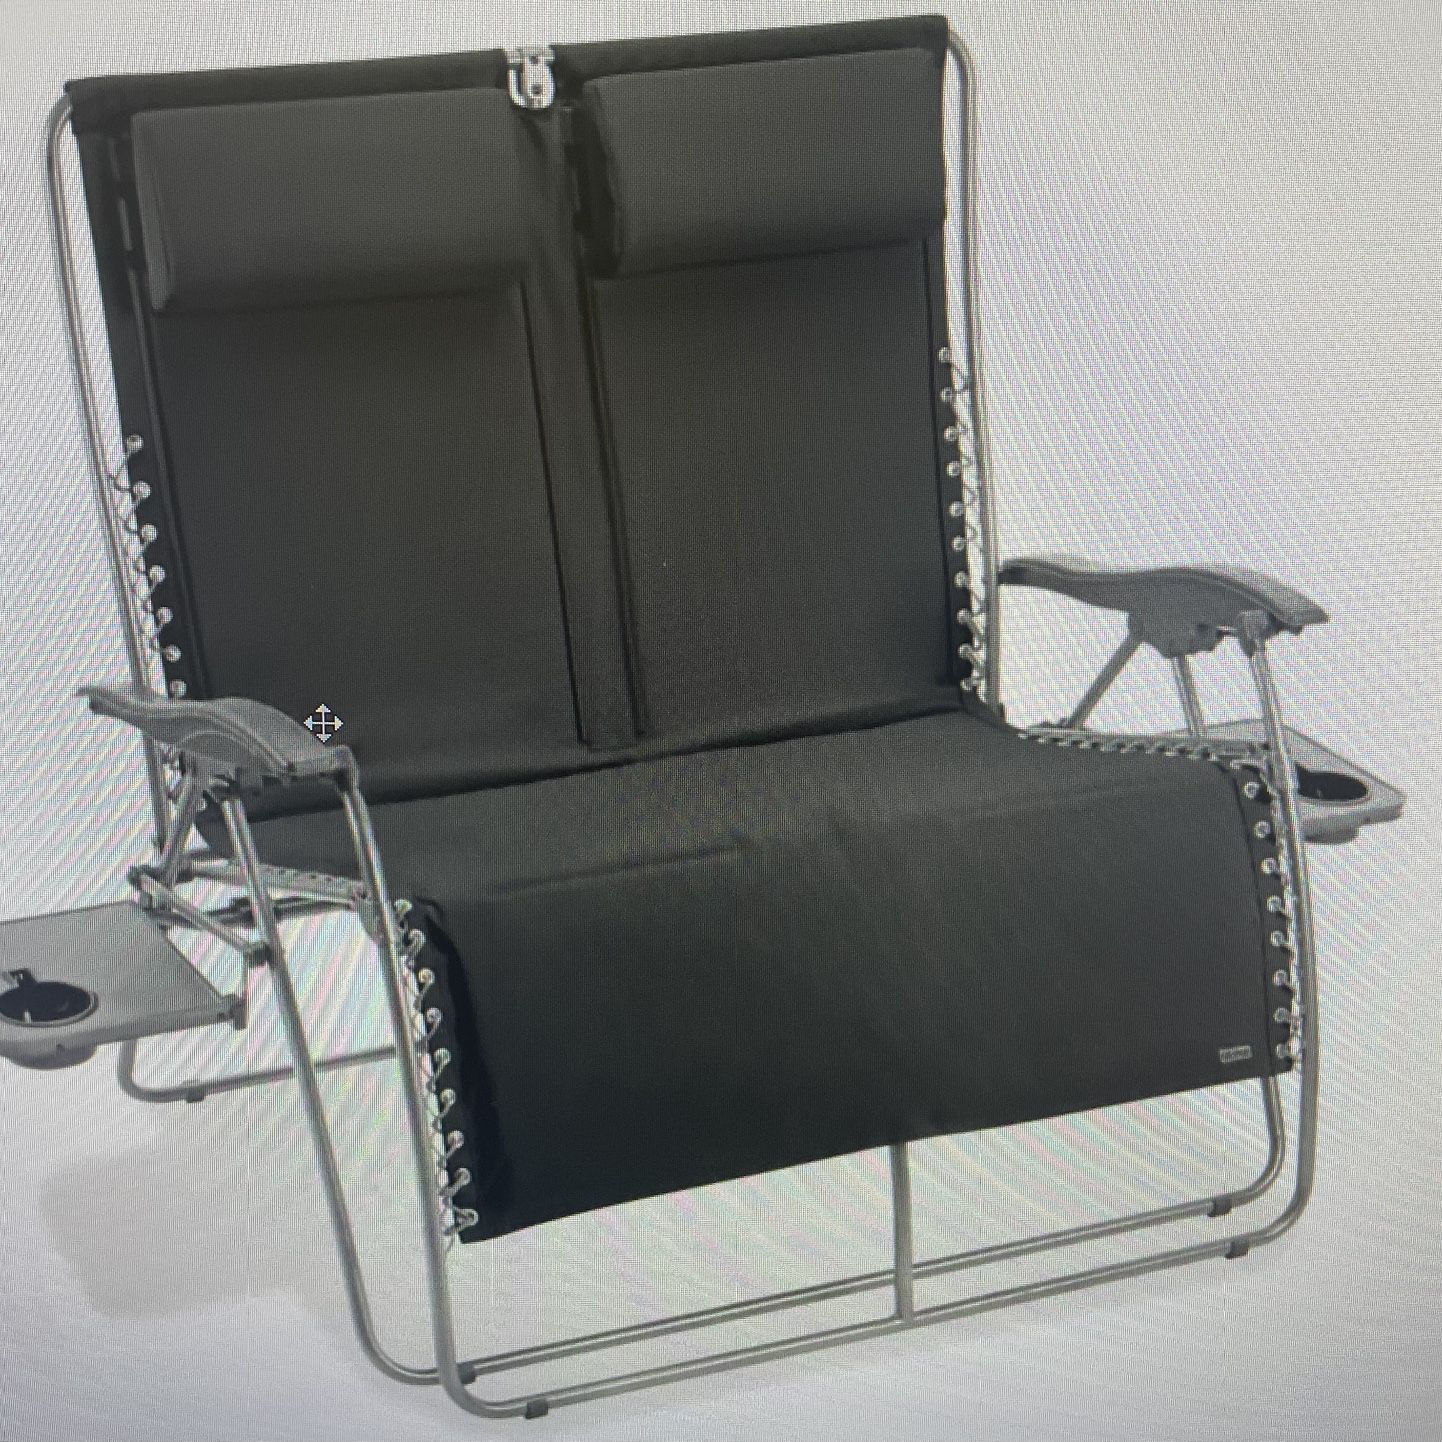 Gravity chair for Sale in Laveen Village, AZ - OfferUp